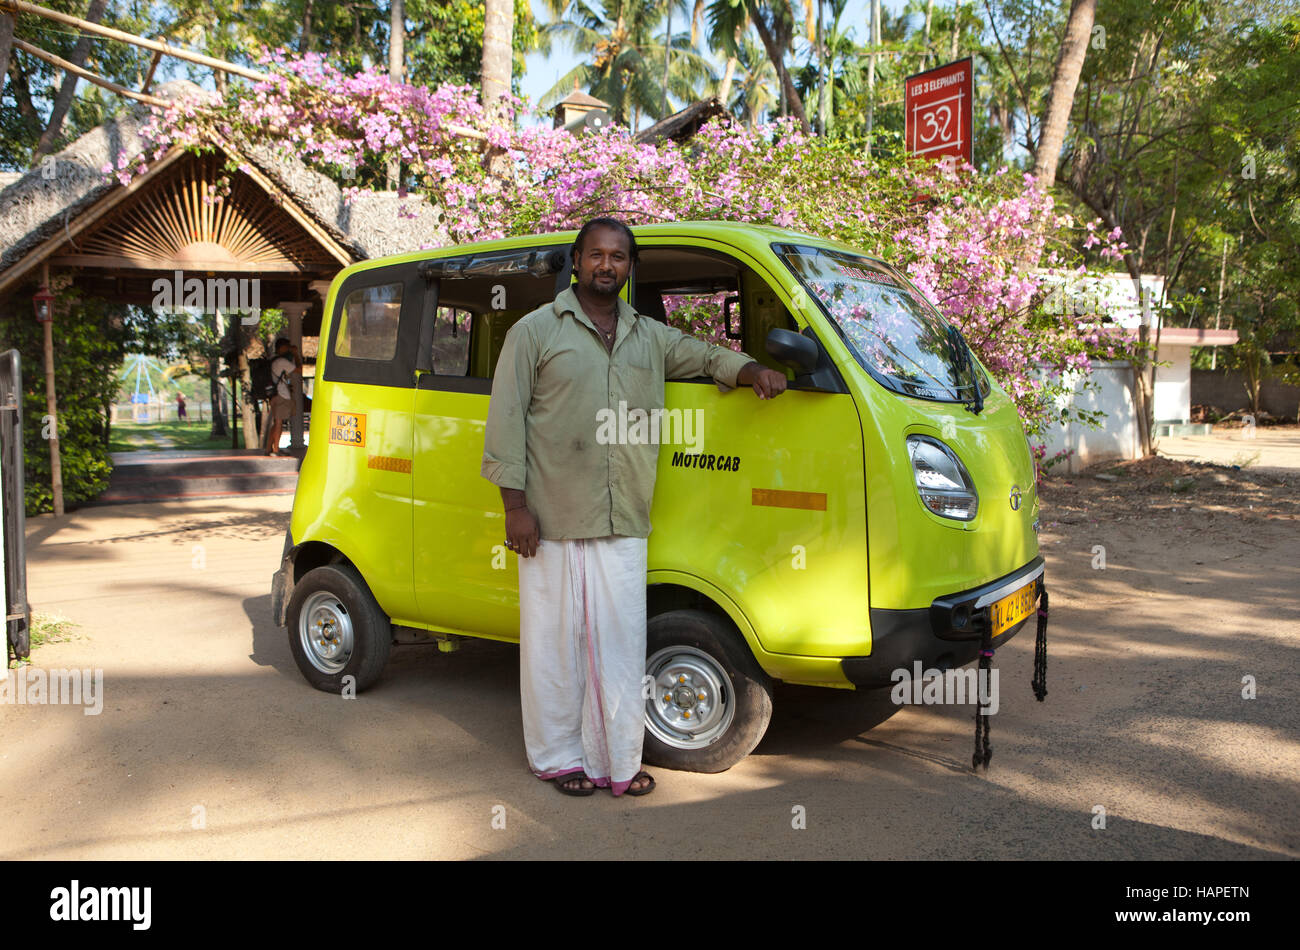 Driver standing next to his new Tata auto rickshaw taxi in Cherai Beach, India Stock Photo